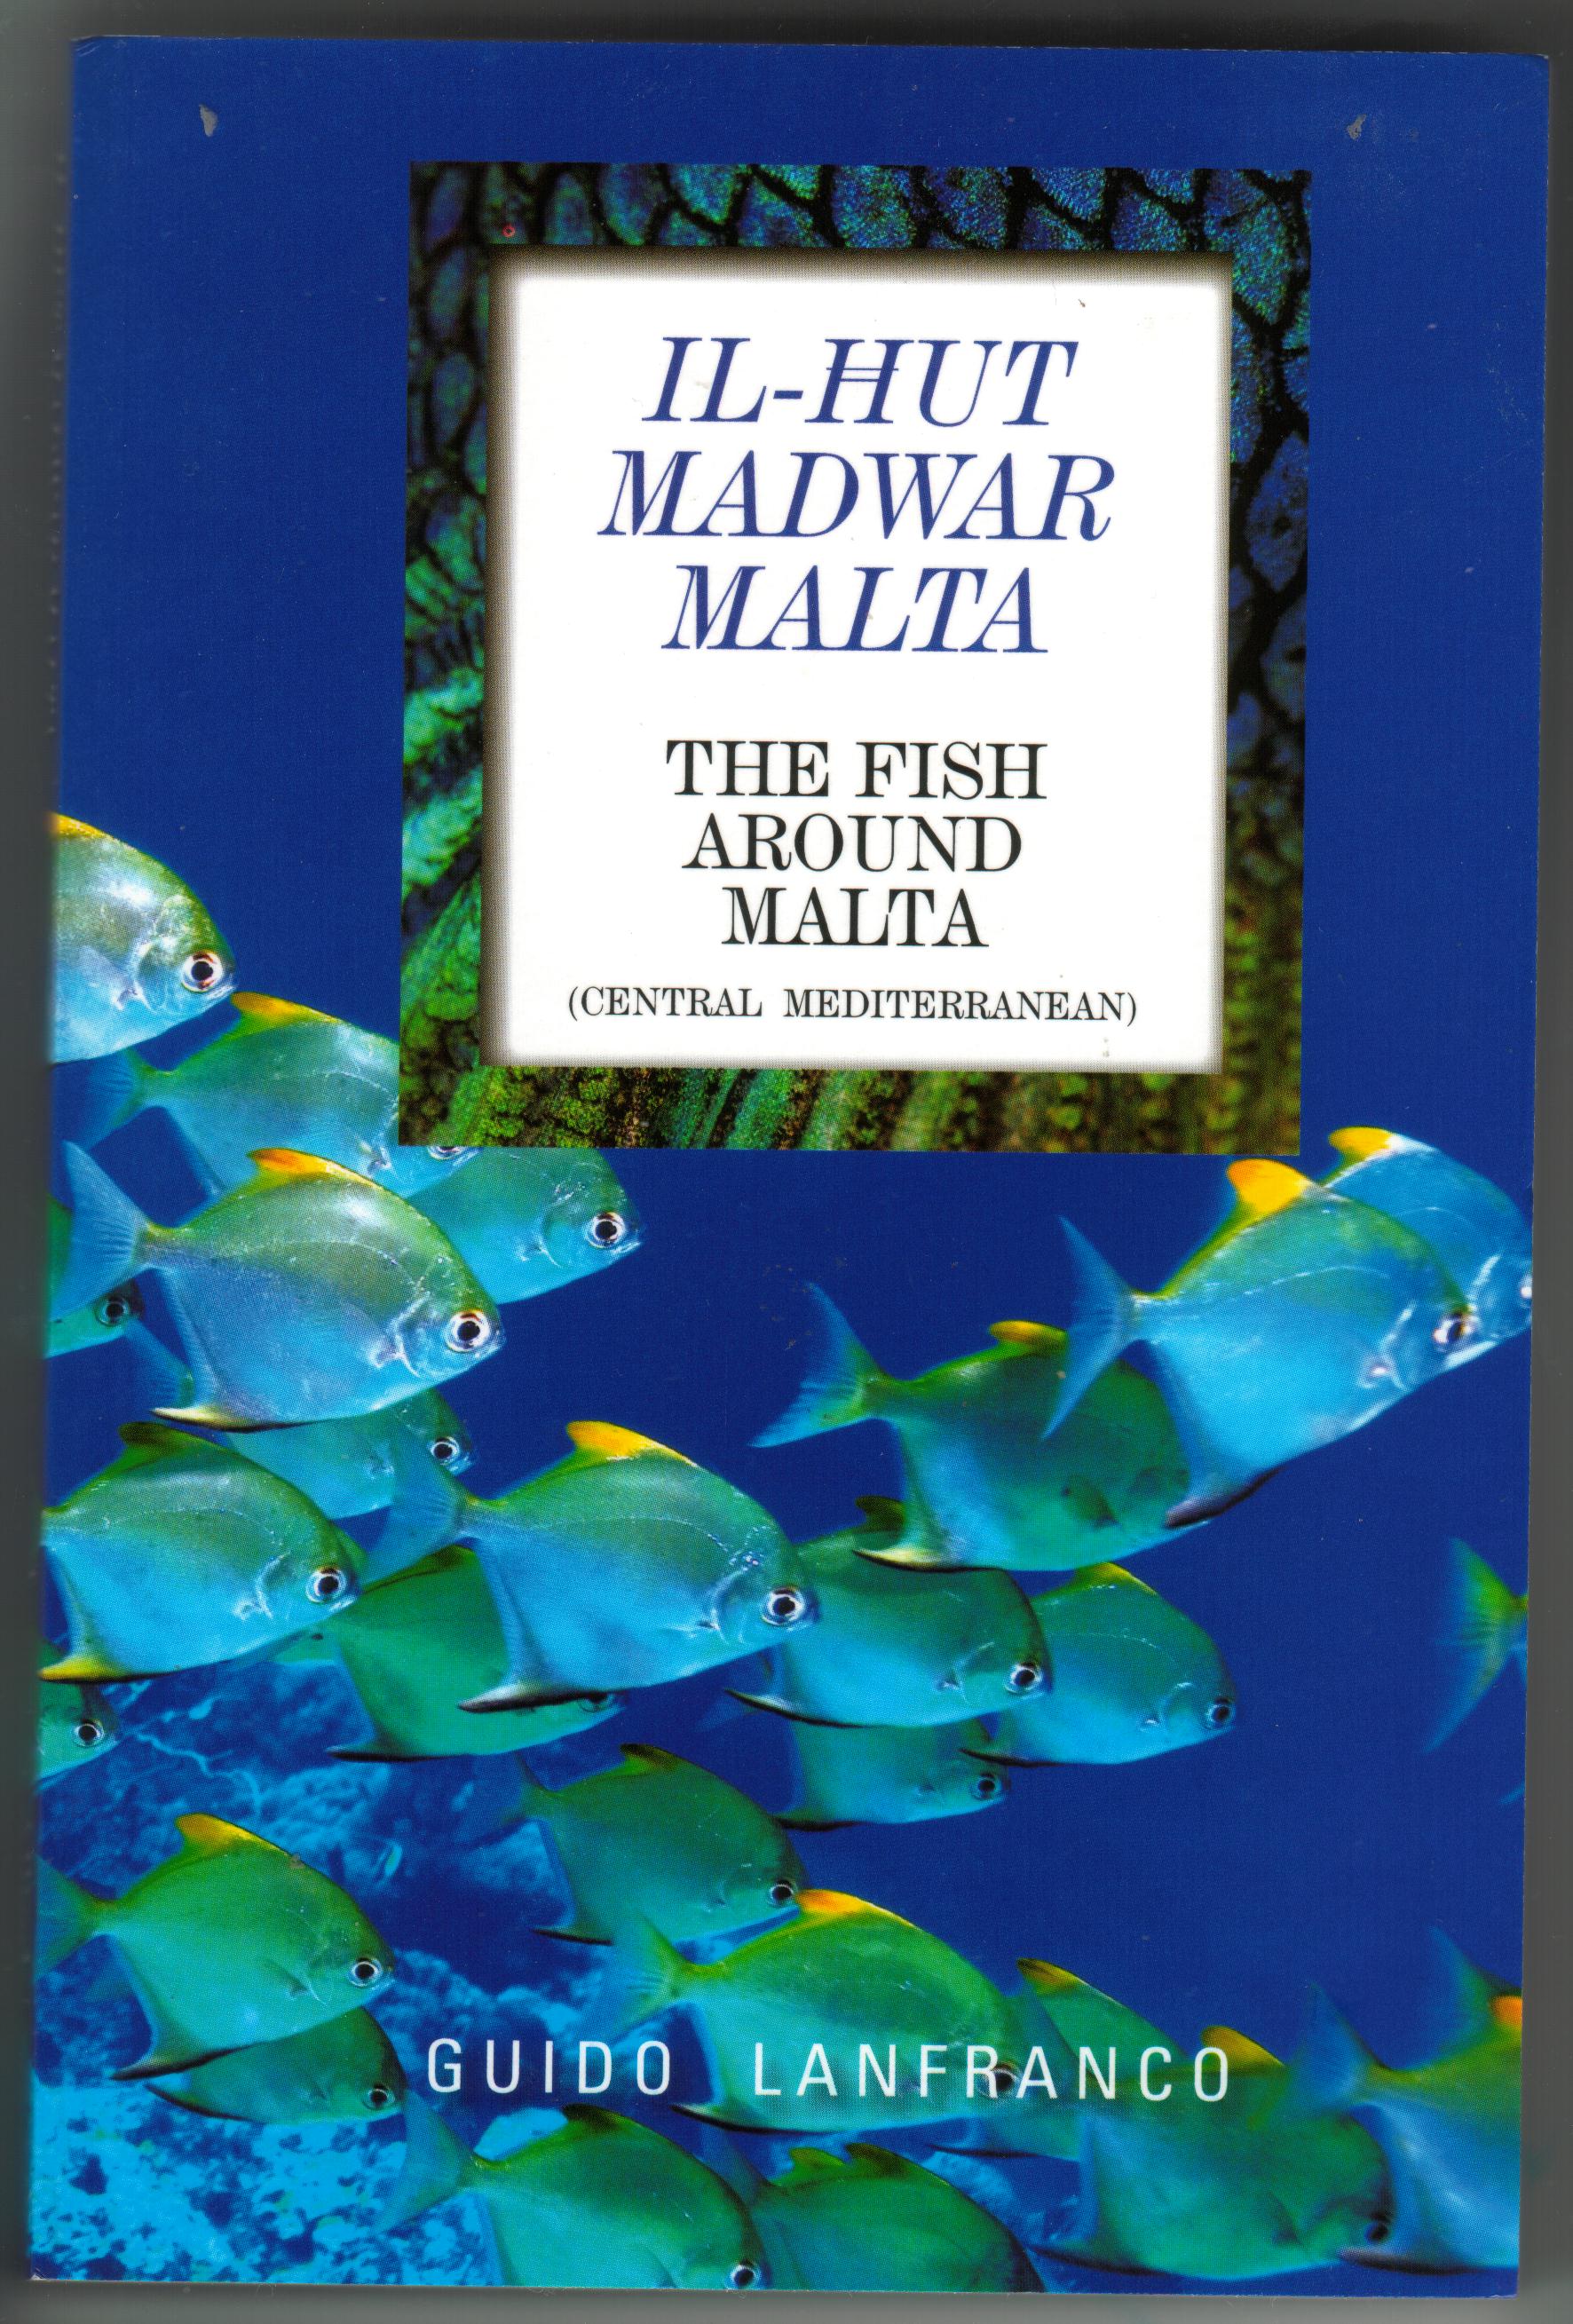 THE FISH AROUND MALTA 